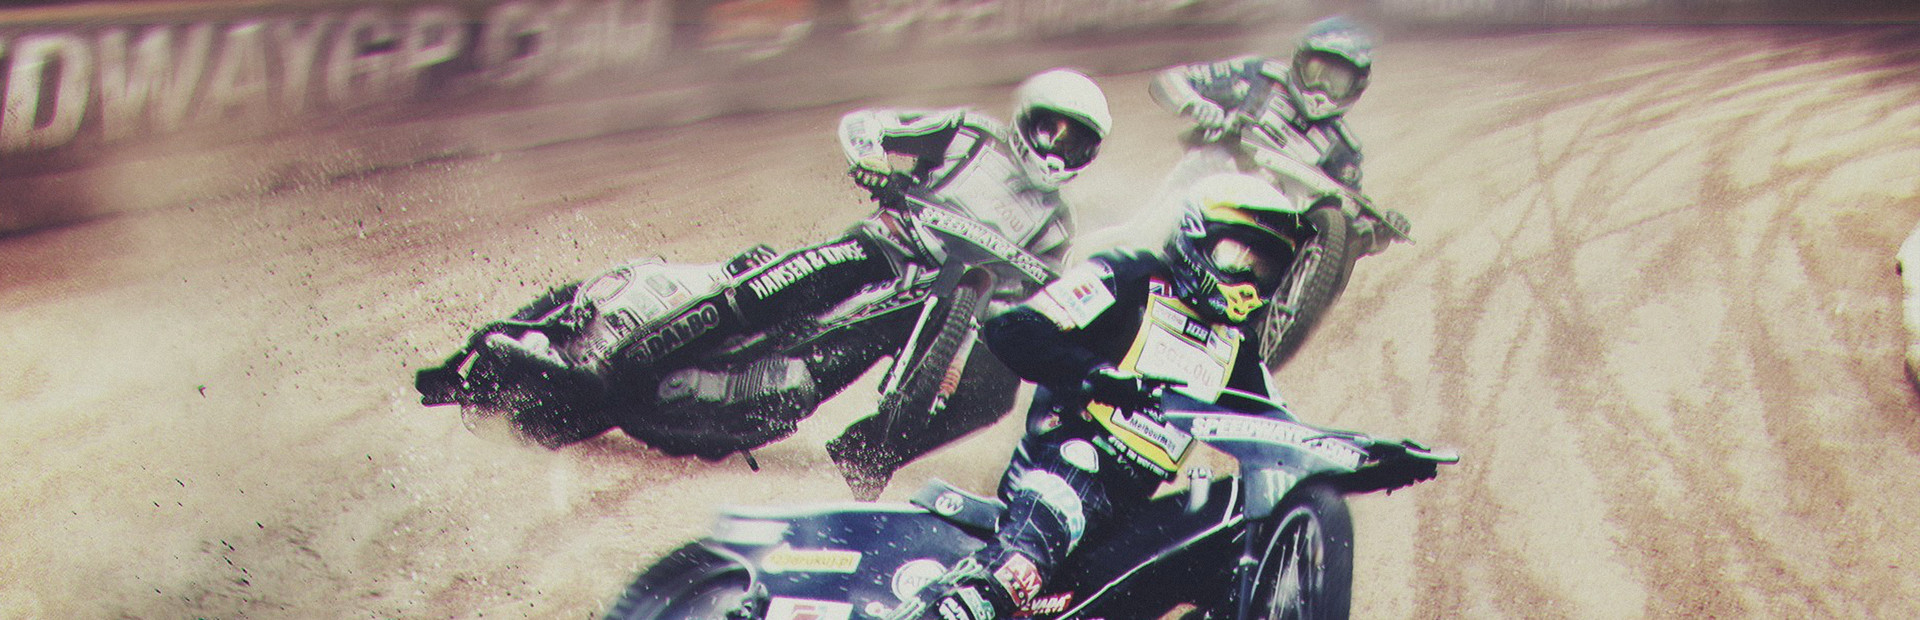 FIM Speedway Grand Prix 15 cover image